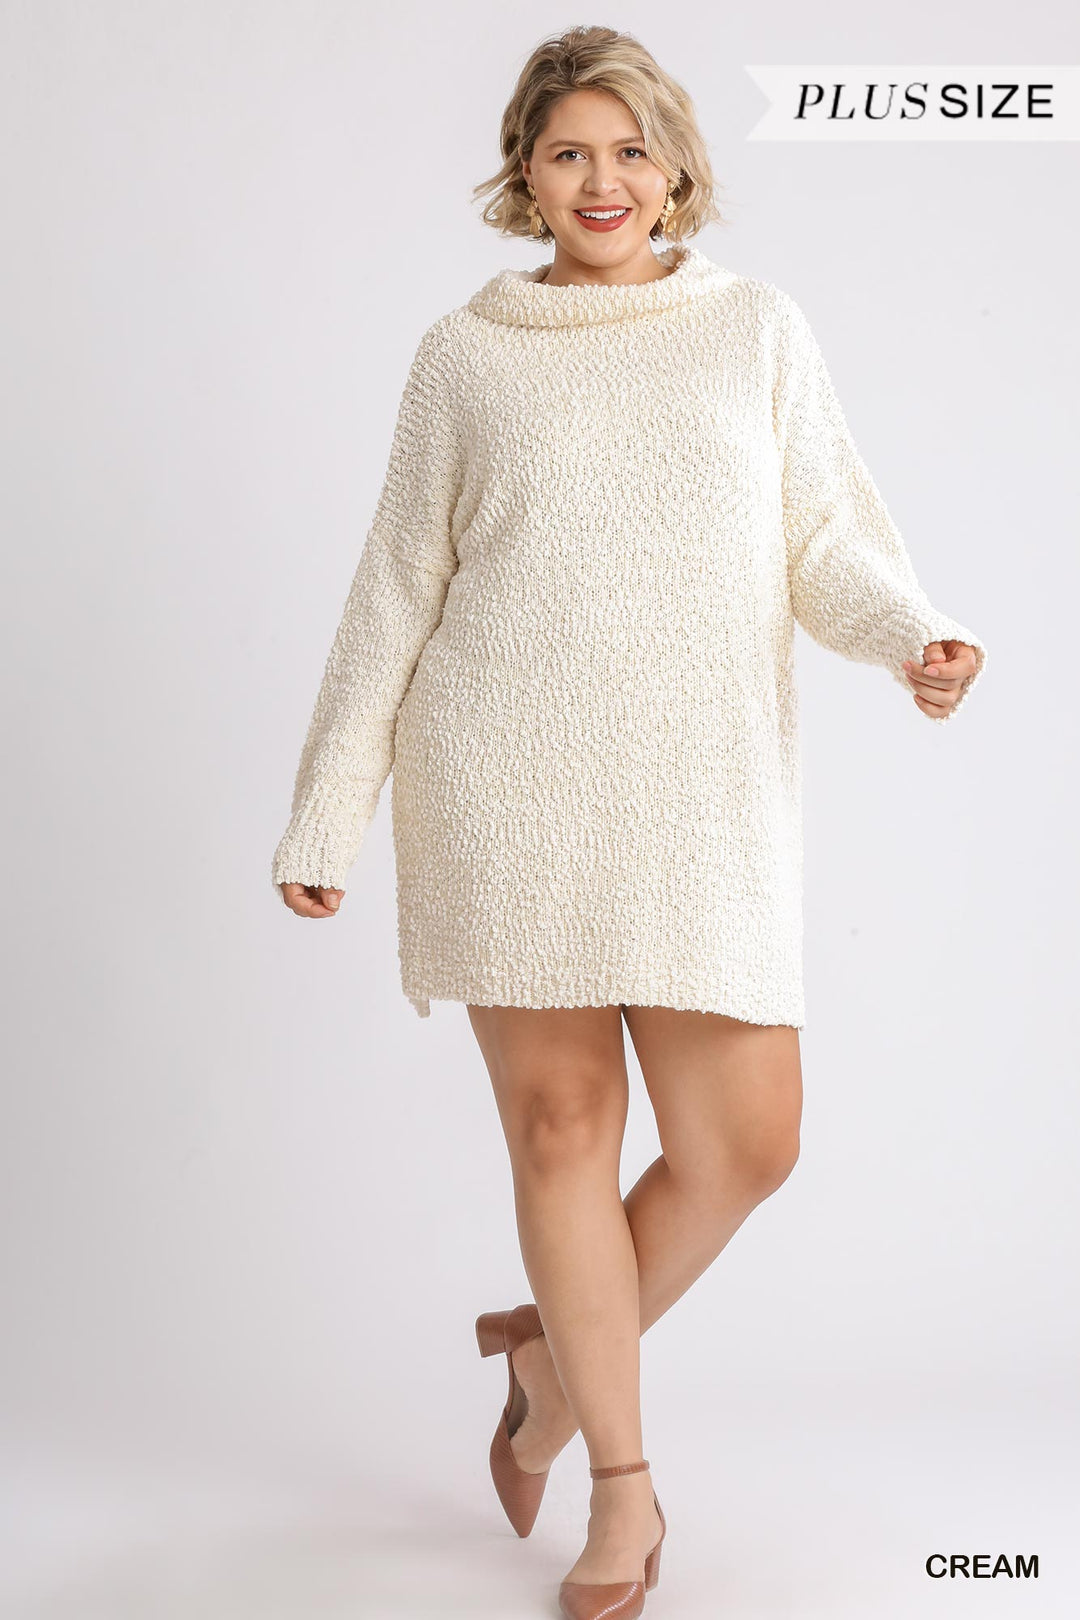 Umgee Melanie Cowl Neck Bouclé Sweater Dress - Cream  RYSE Clothing Co.   